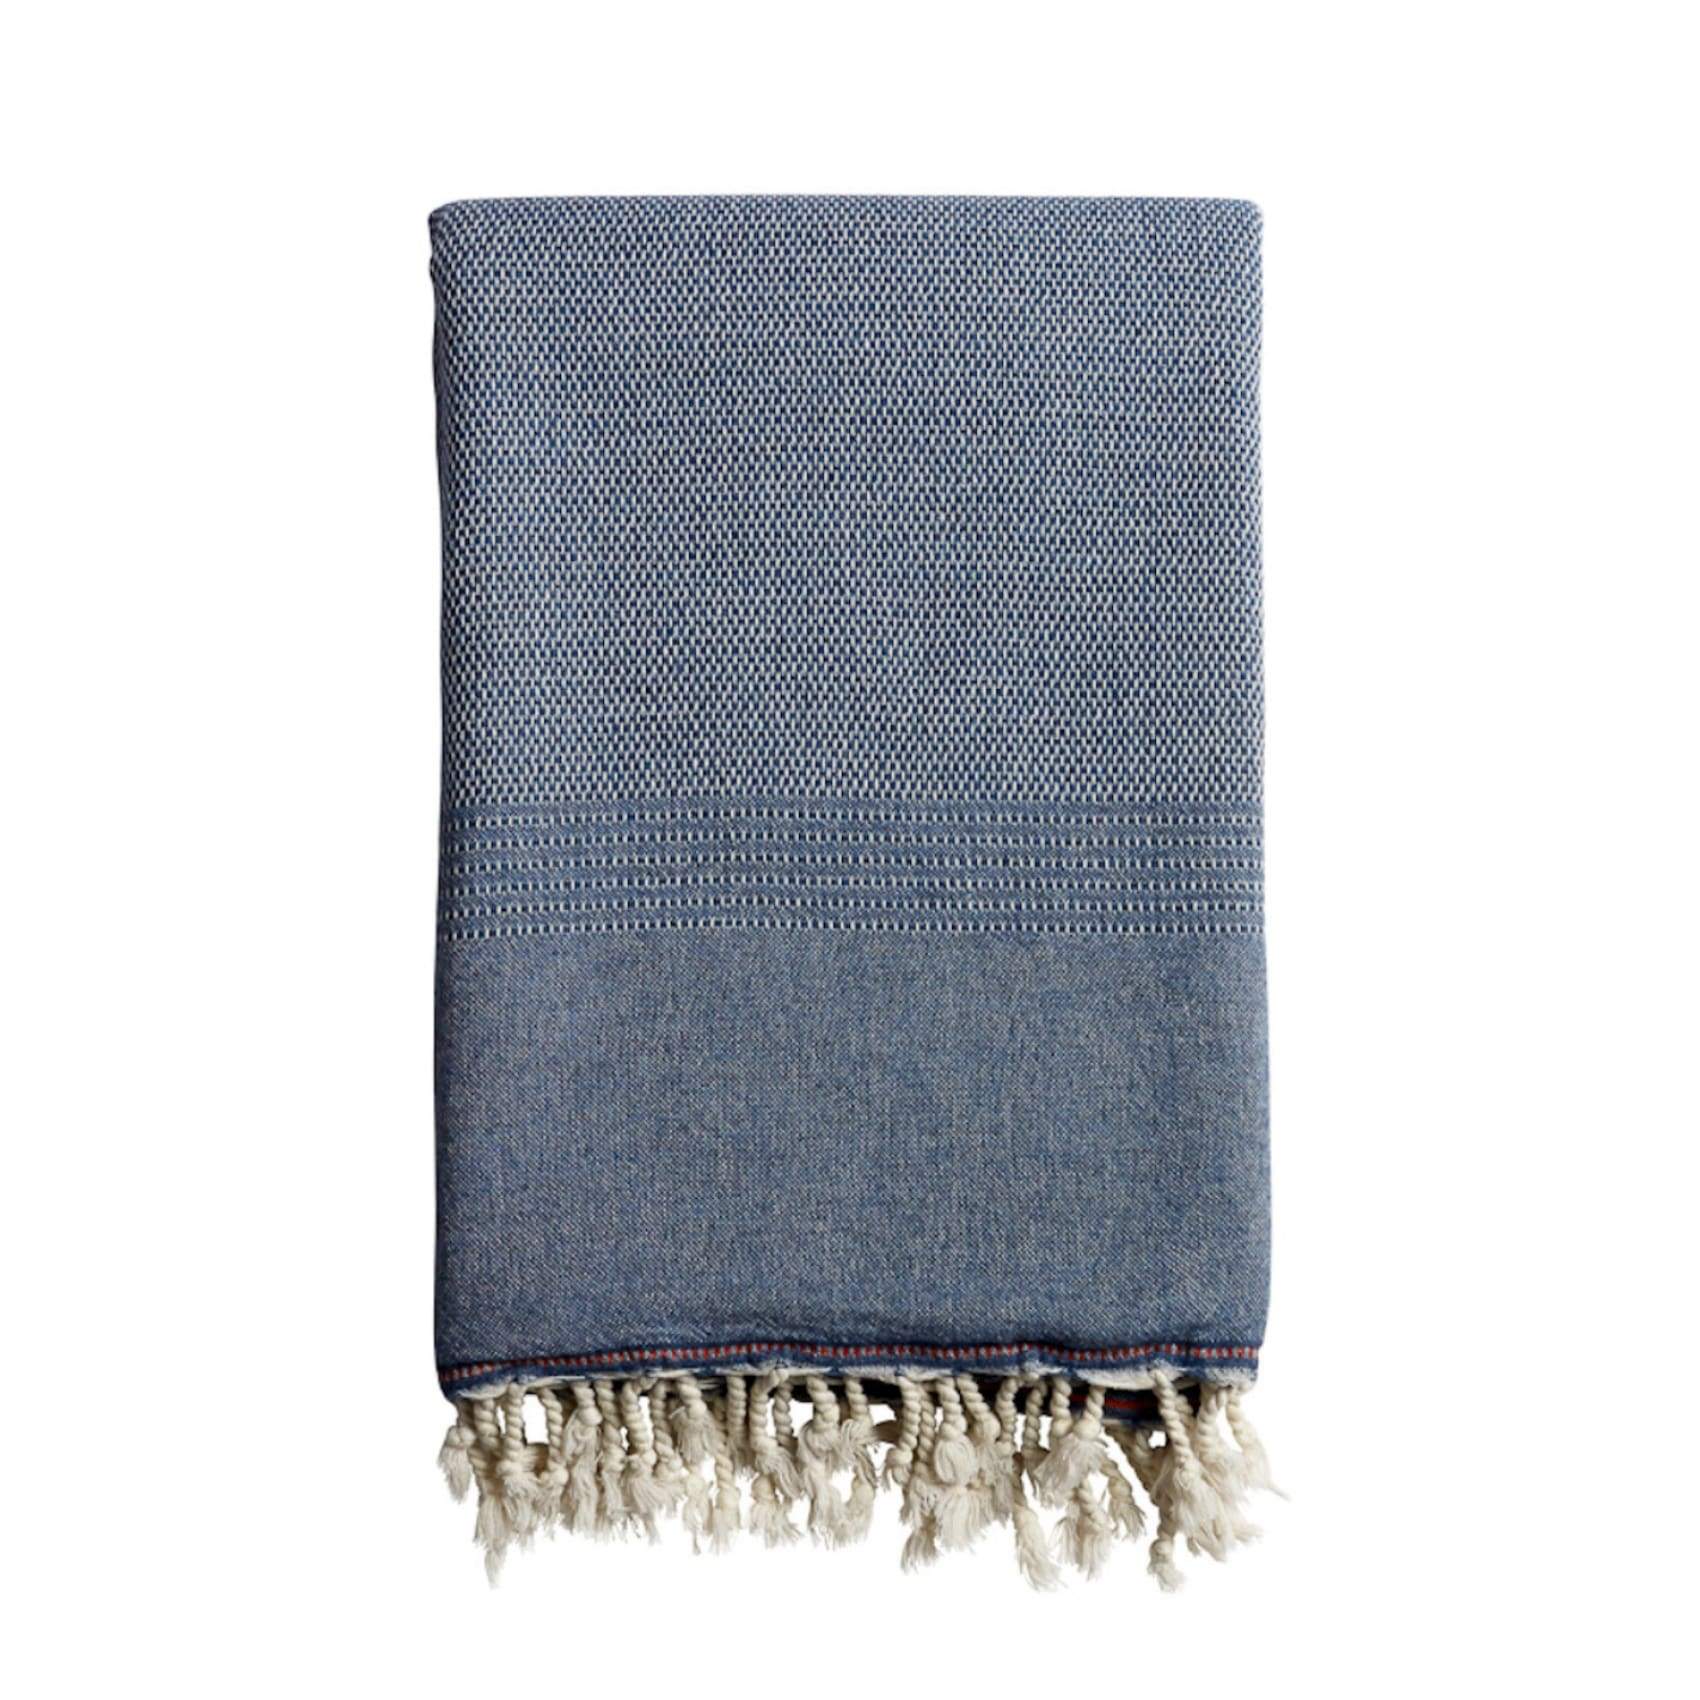 ekin-cotton-wool-blend-vintage-style-blankets-denim-bedroom-blanket-blue-capa-grey-luks-linen-stole-linens-282.jpg